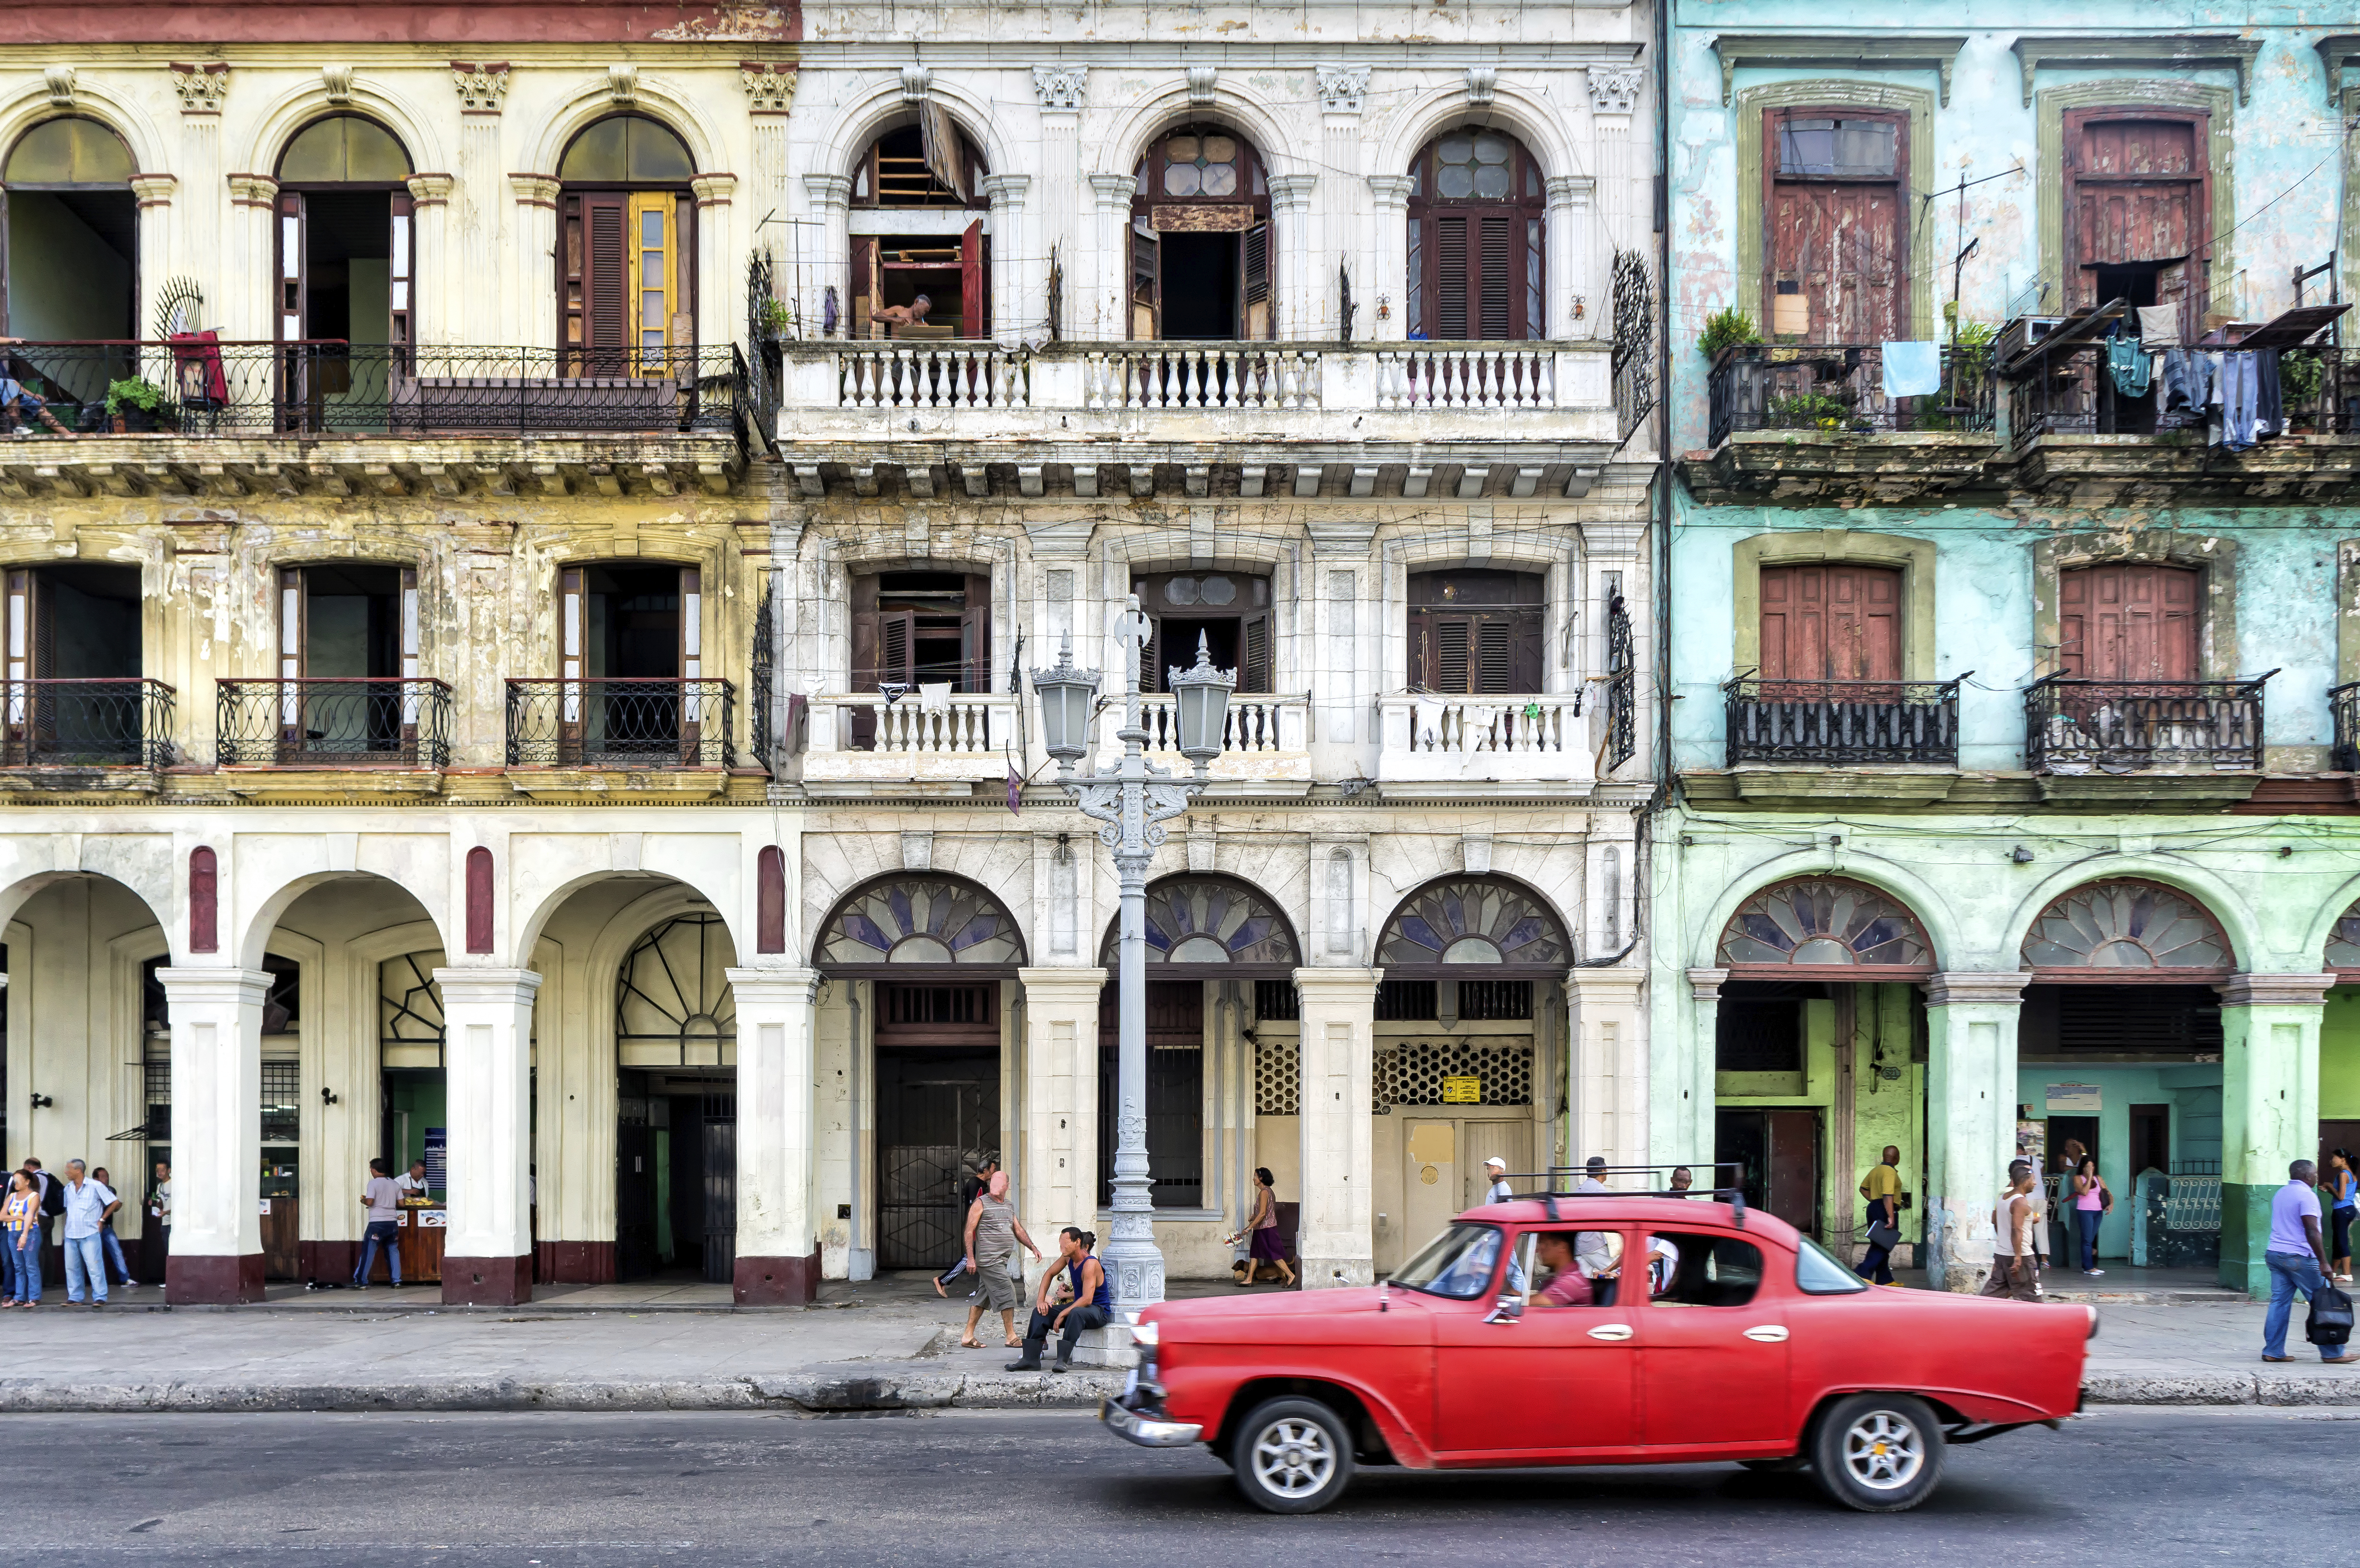 høj Guinness ozon Top 10 ting at lave i Havana | Skyscanner Danmark